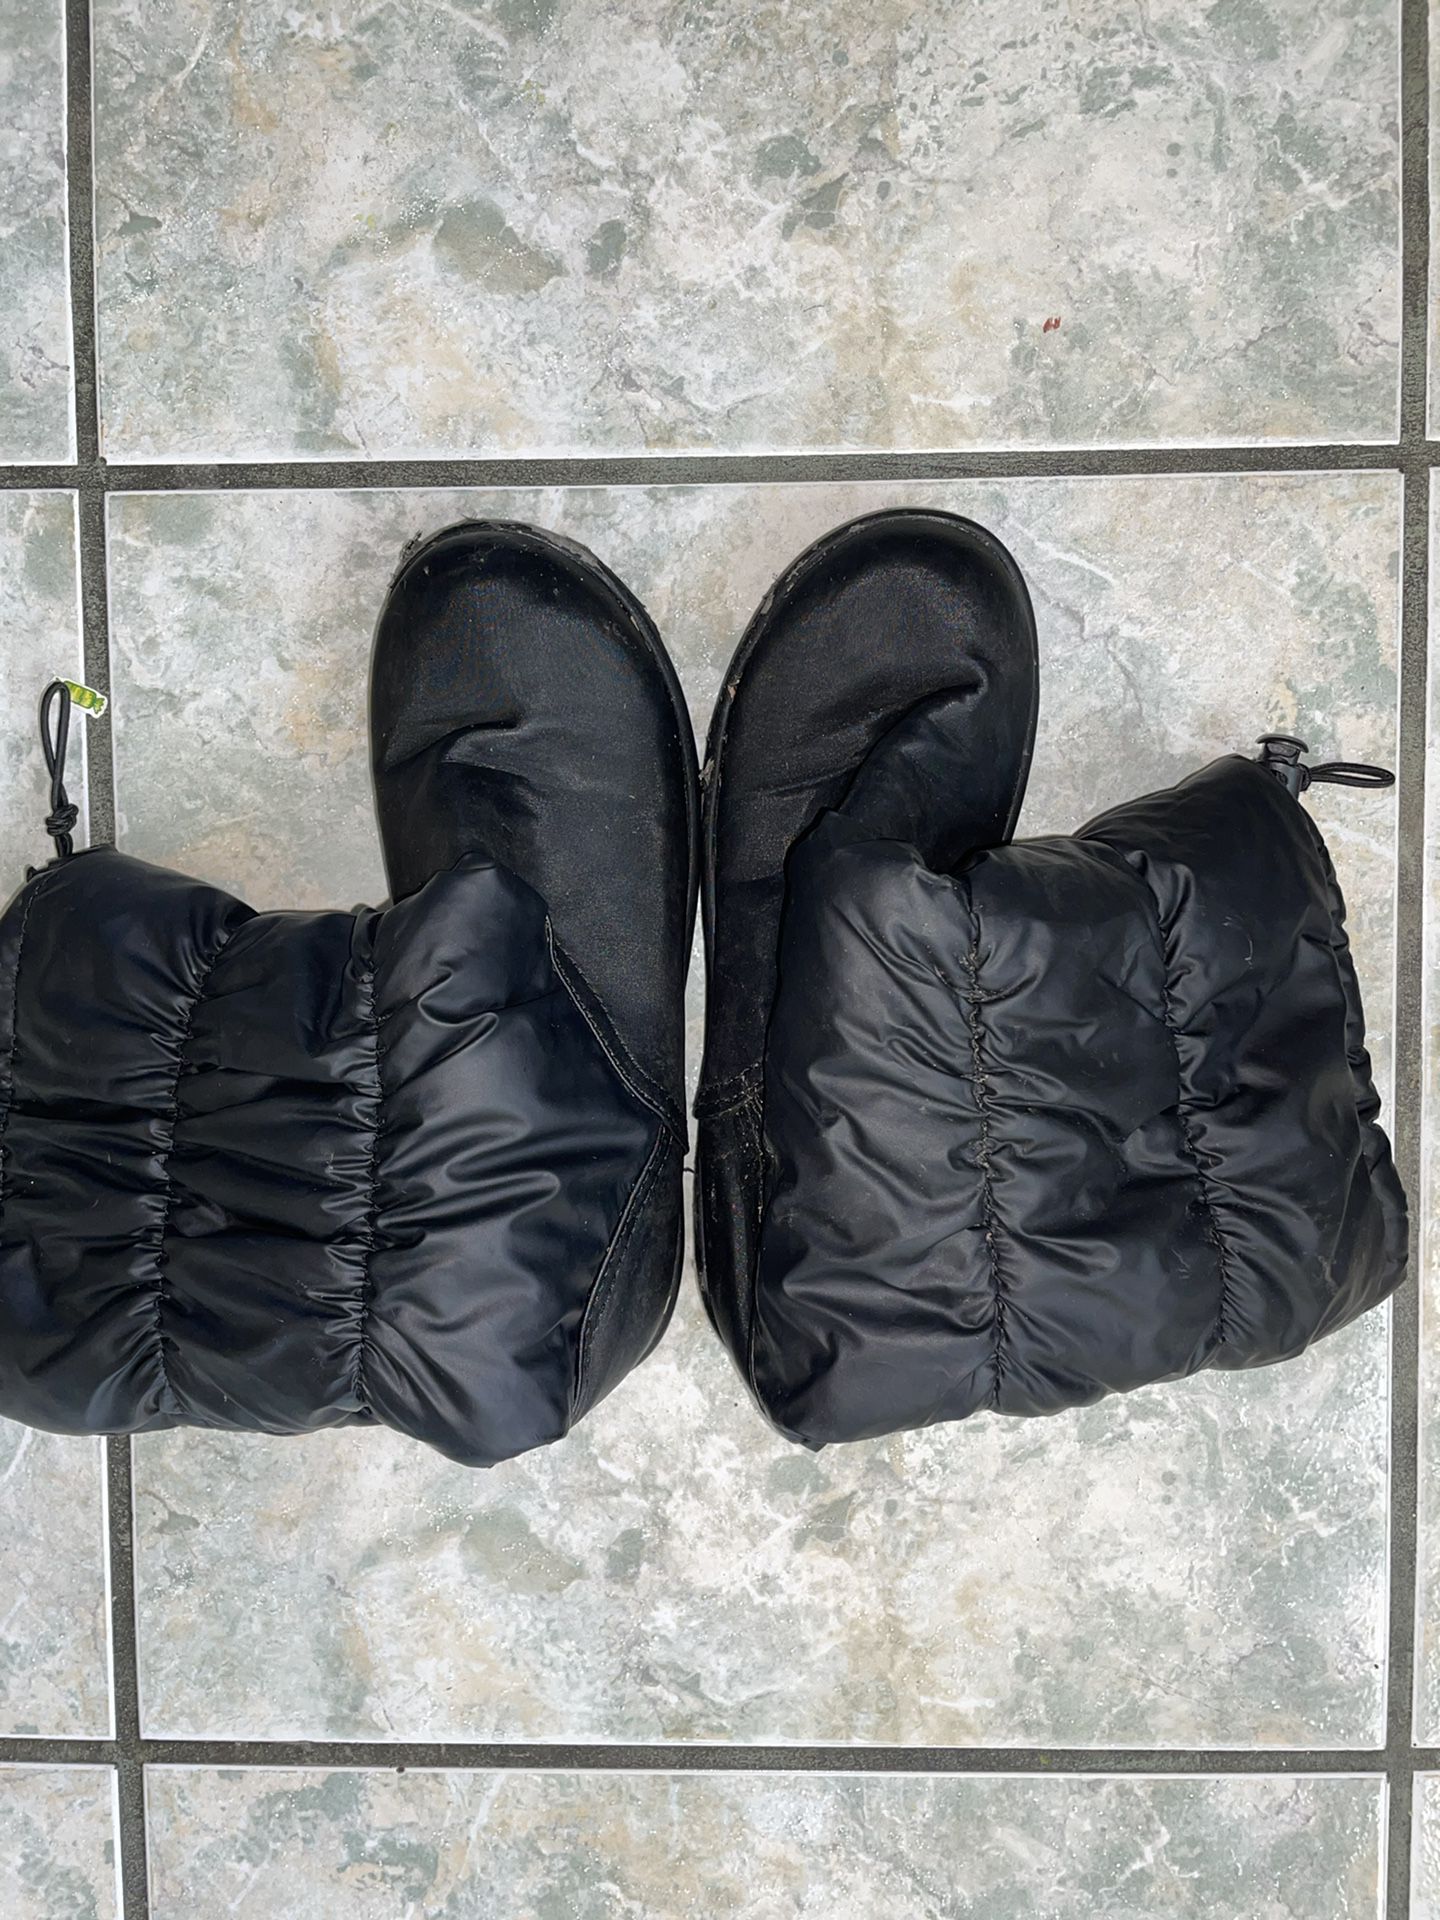 Black Women’s Snow Boots  Size  7, Worn 